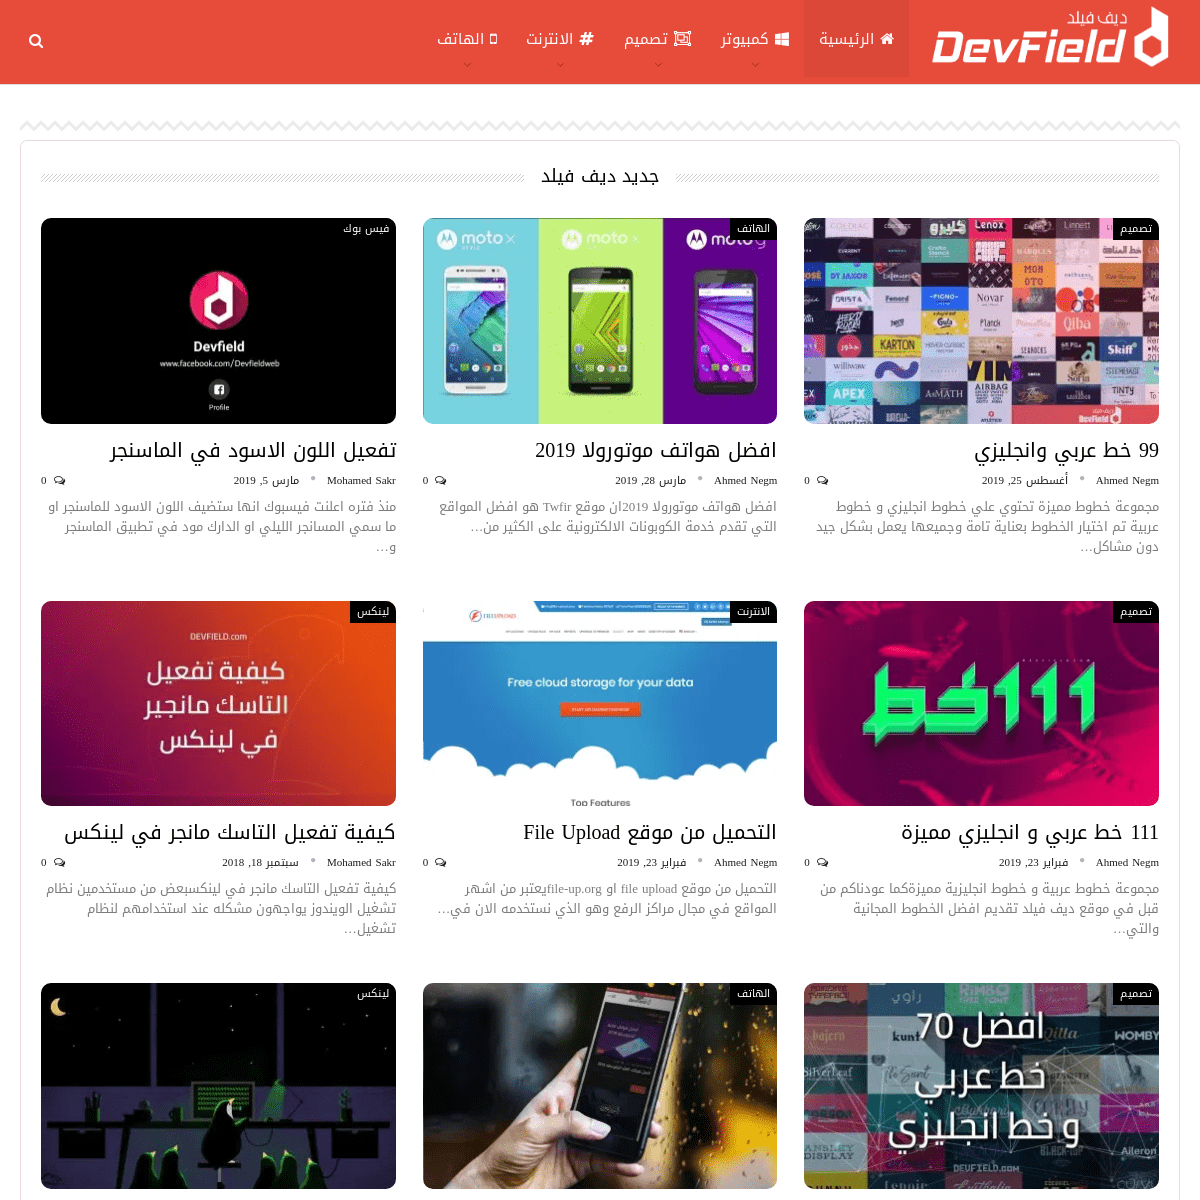 A complete backup of devfield.com